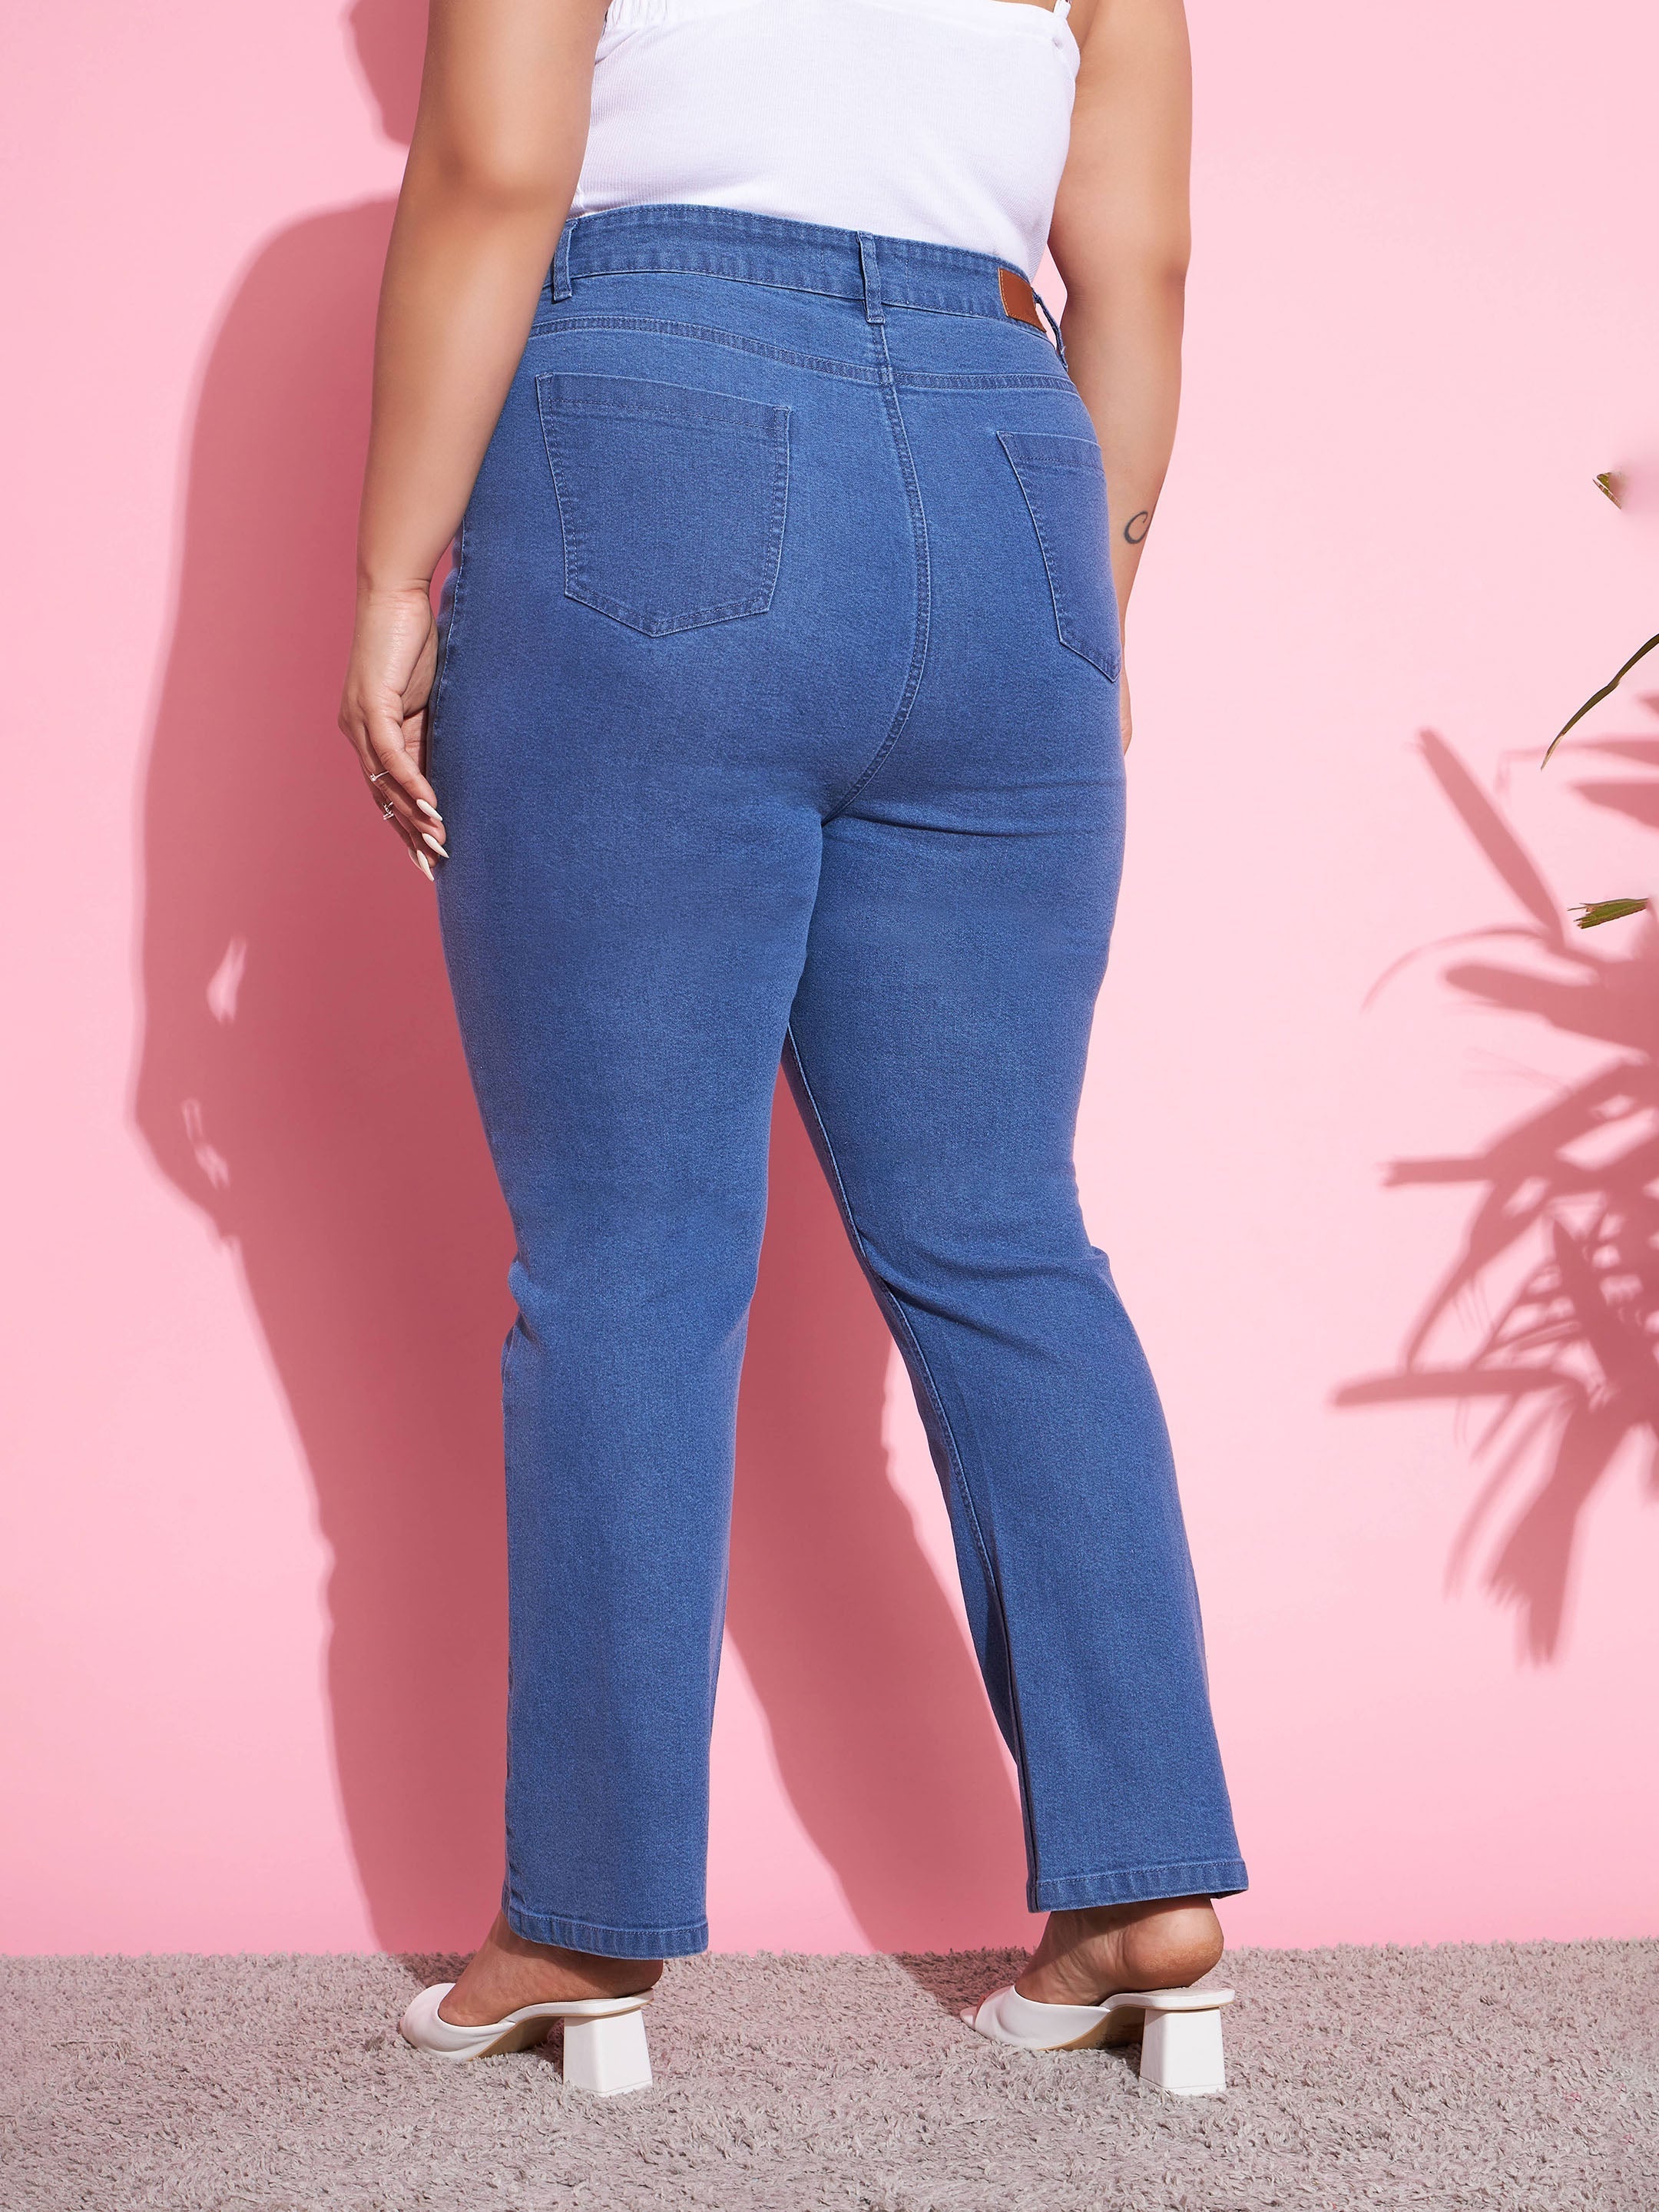 Women's Blue Wash Denim Boot Cut Jeans - SASSAFRAS